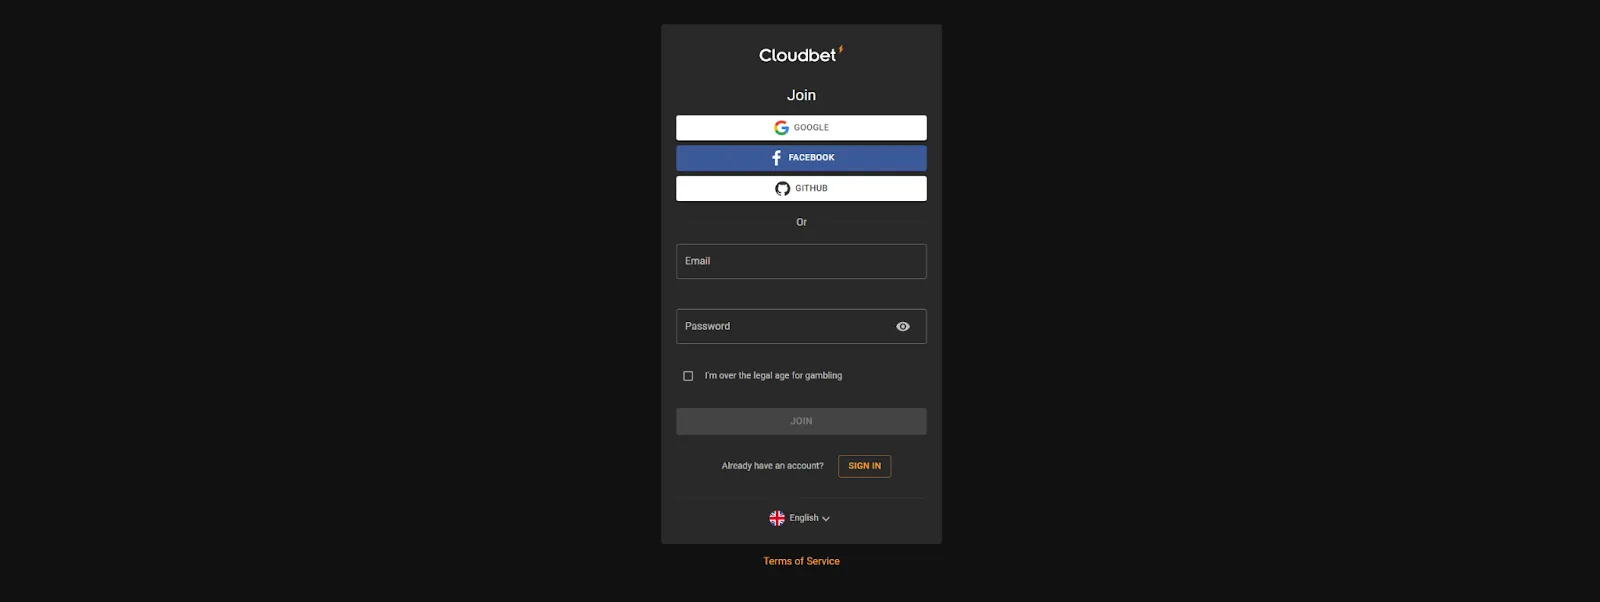 CloudBet register.